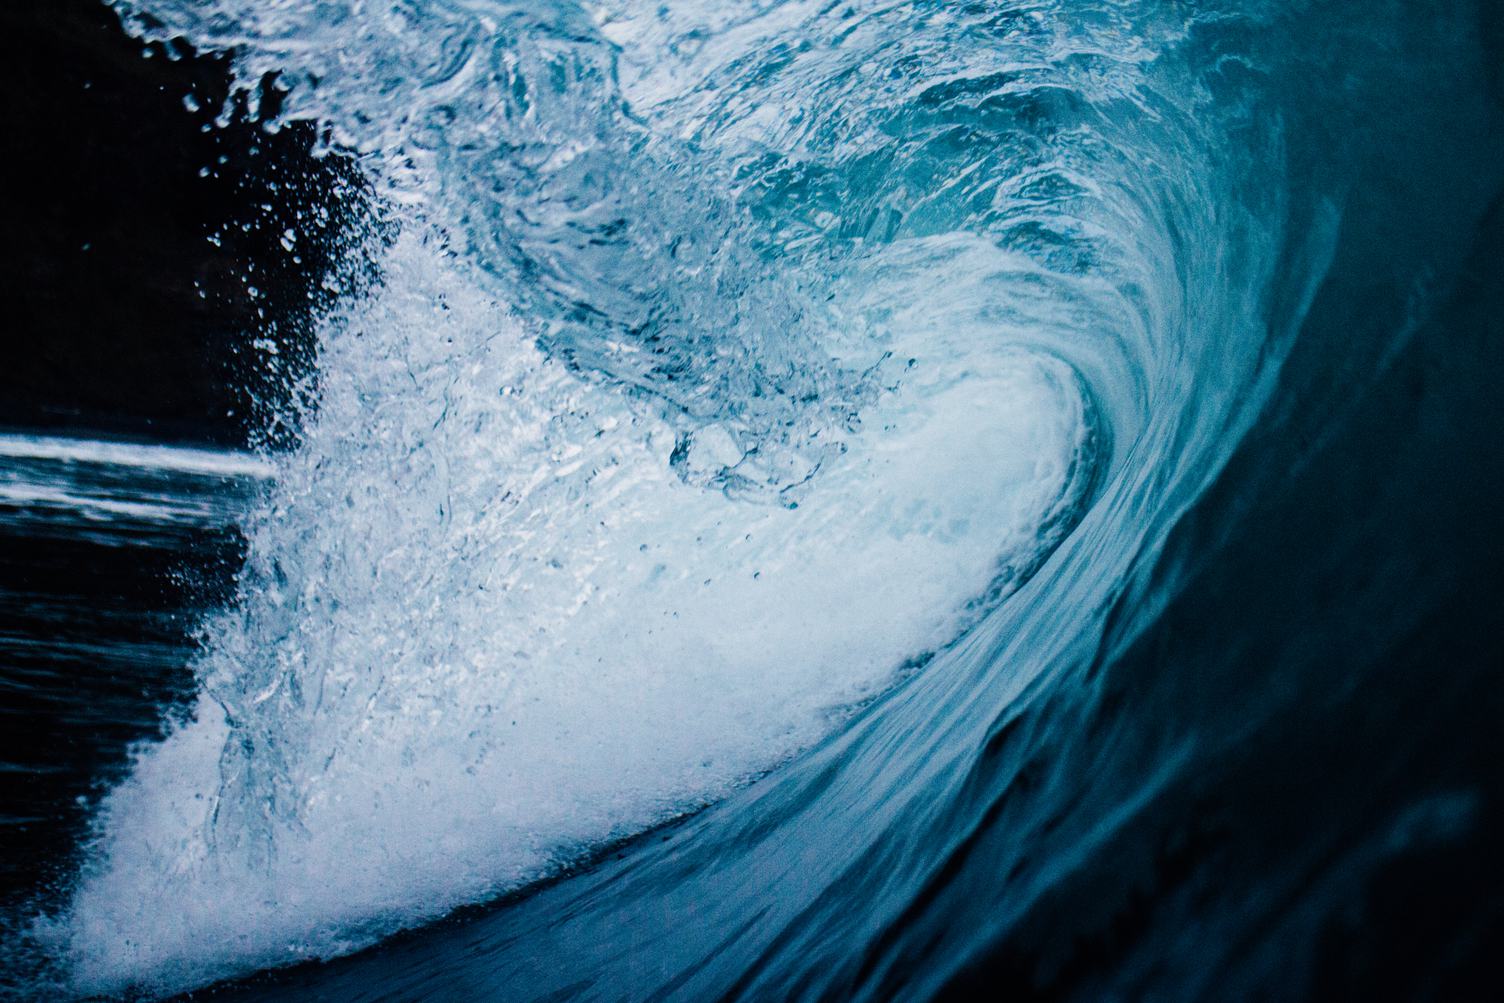 Surfing Wave Breaks in the Ocean